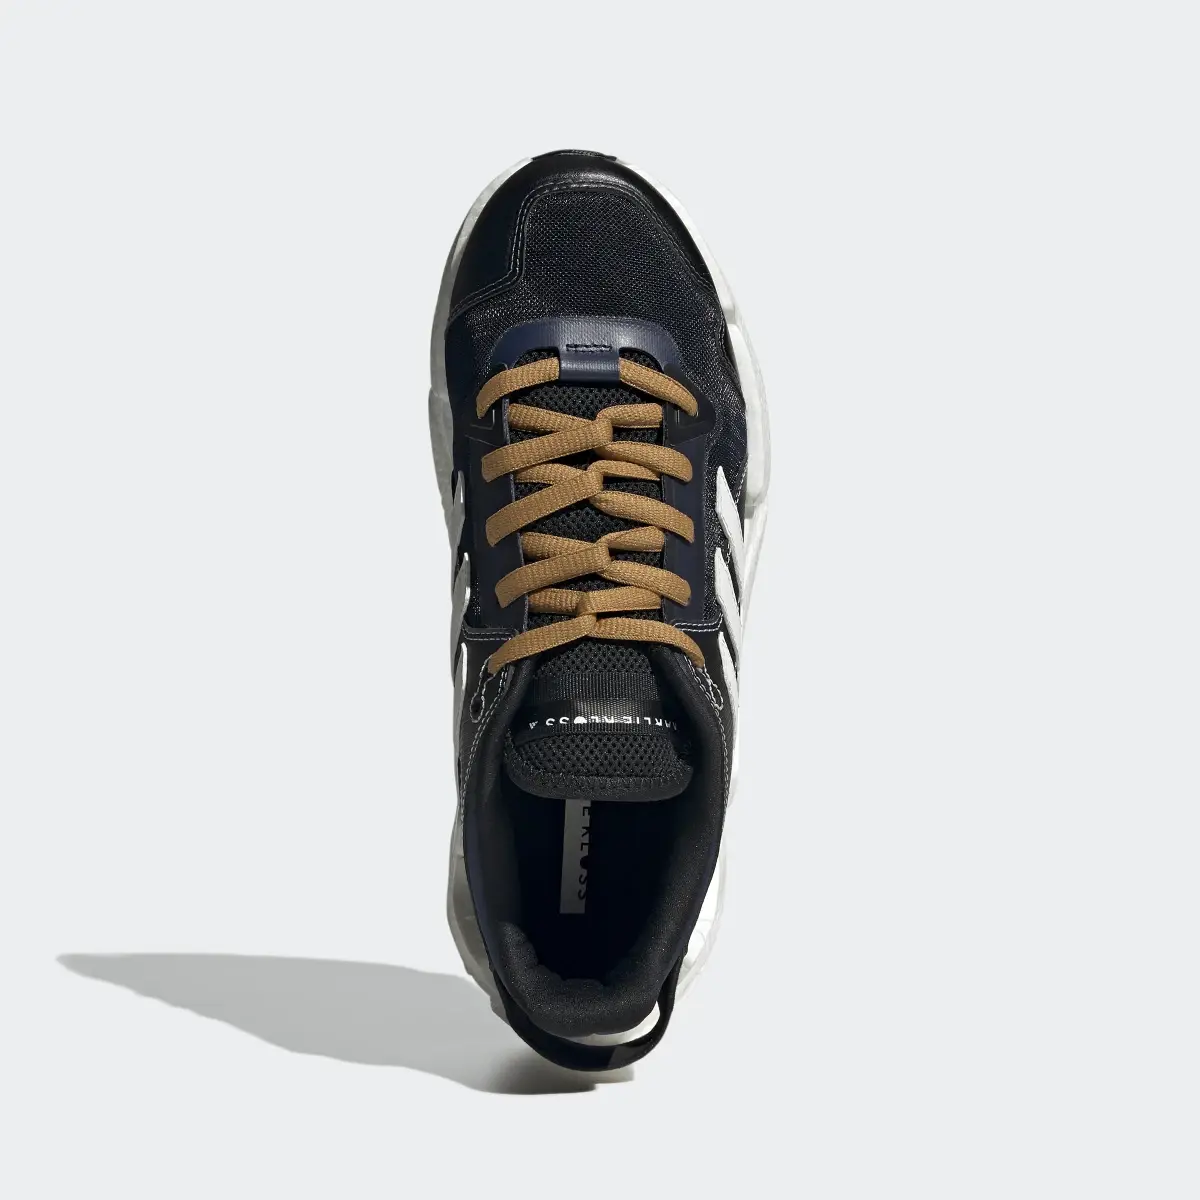 Adidas Zapatilla Karlie Kloss X9000. 3